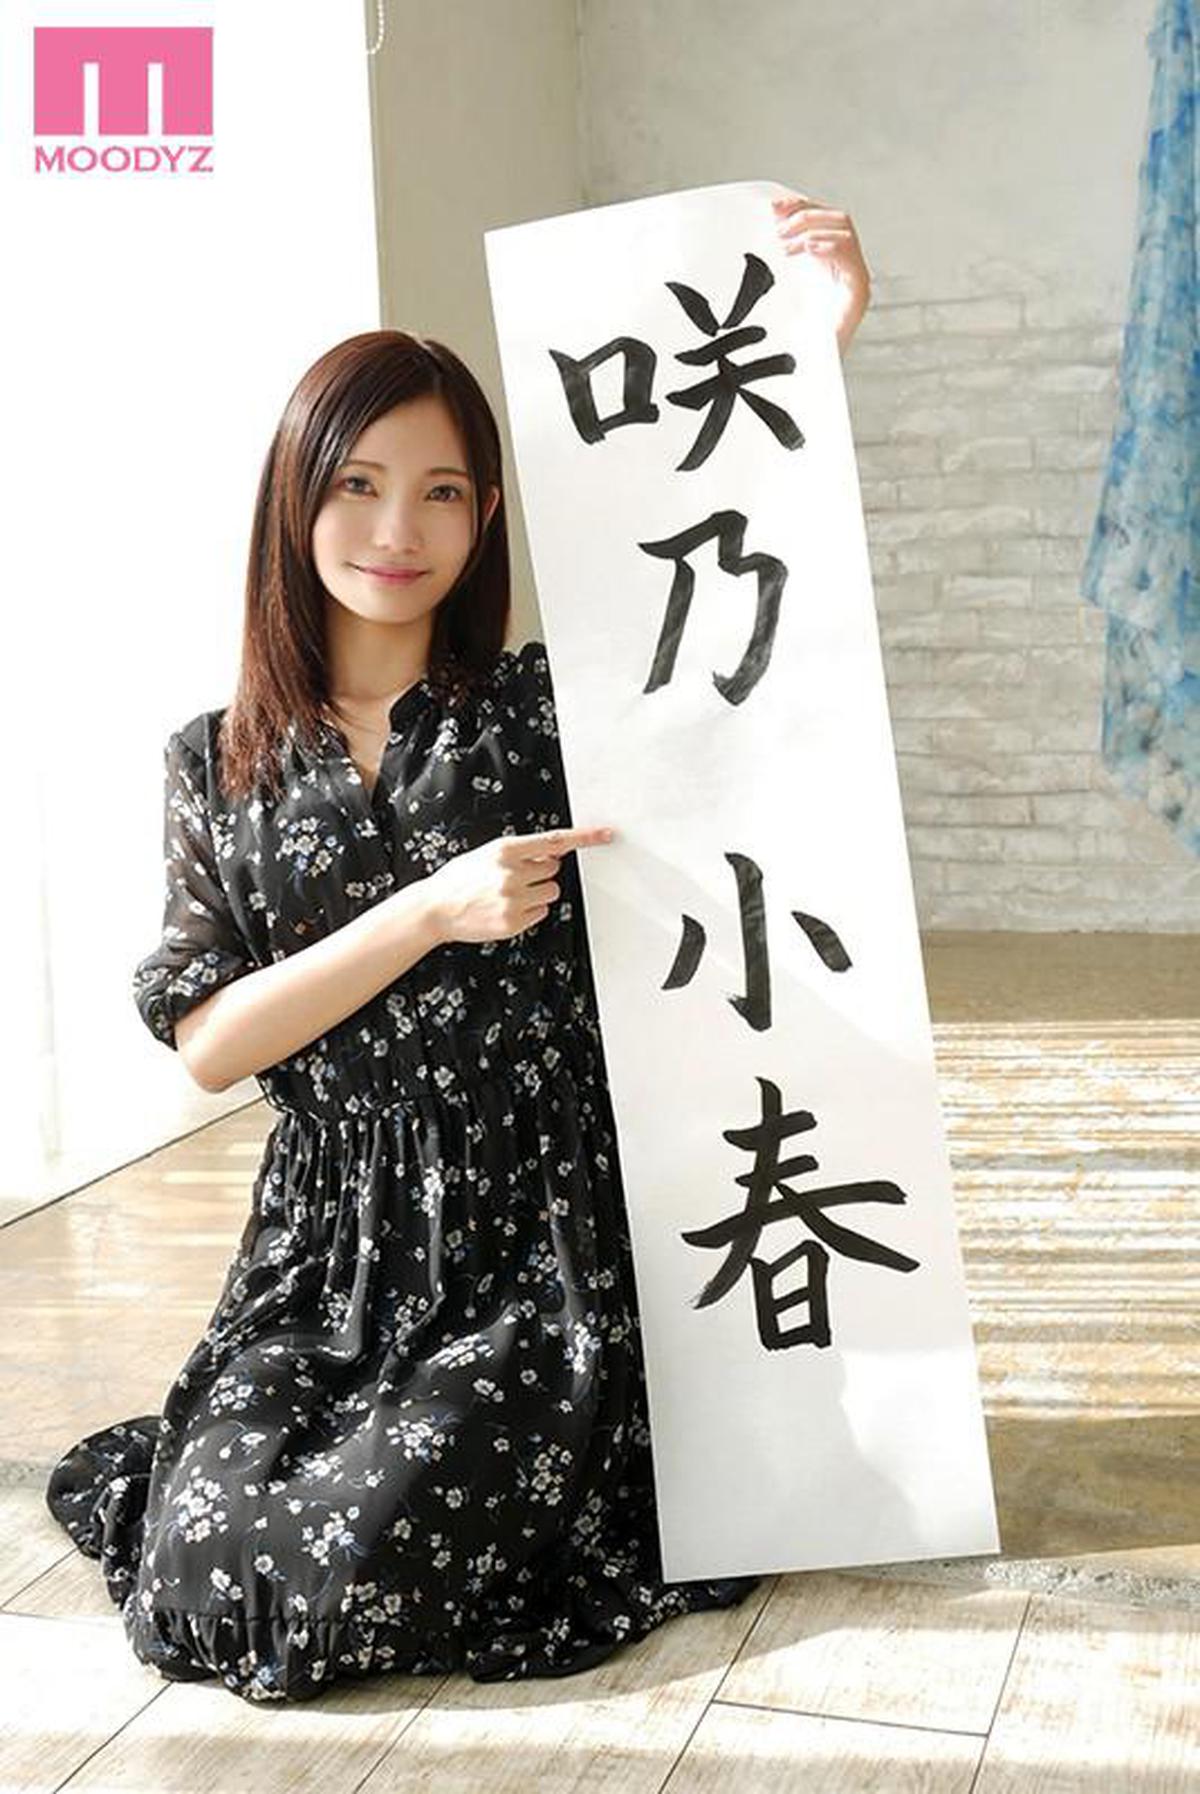 FHD MIDE-640 ربع نشط طالبة جامعية تبلغ من العمر 20 عامًا فقط جميلة ولطيفة Sakino Koharu